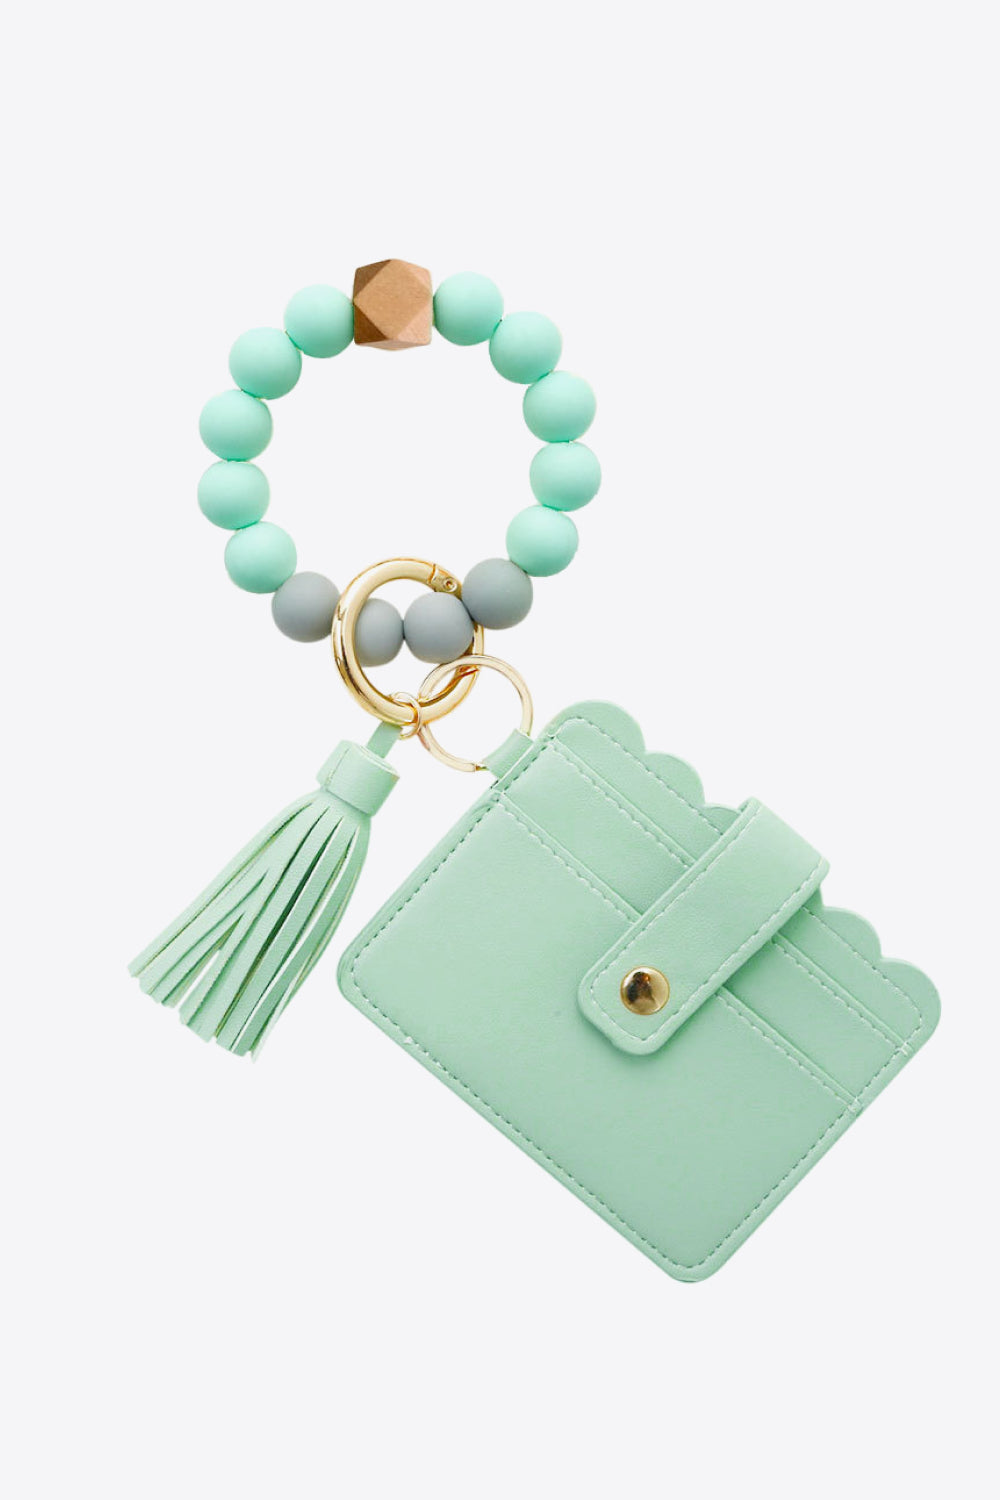 Trendsi Cupid Beauty Supplies Light Green / One Size Keychains 2-Pack Mini Purse Tassel Key Chain